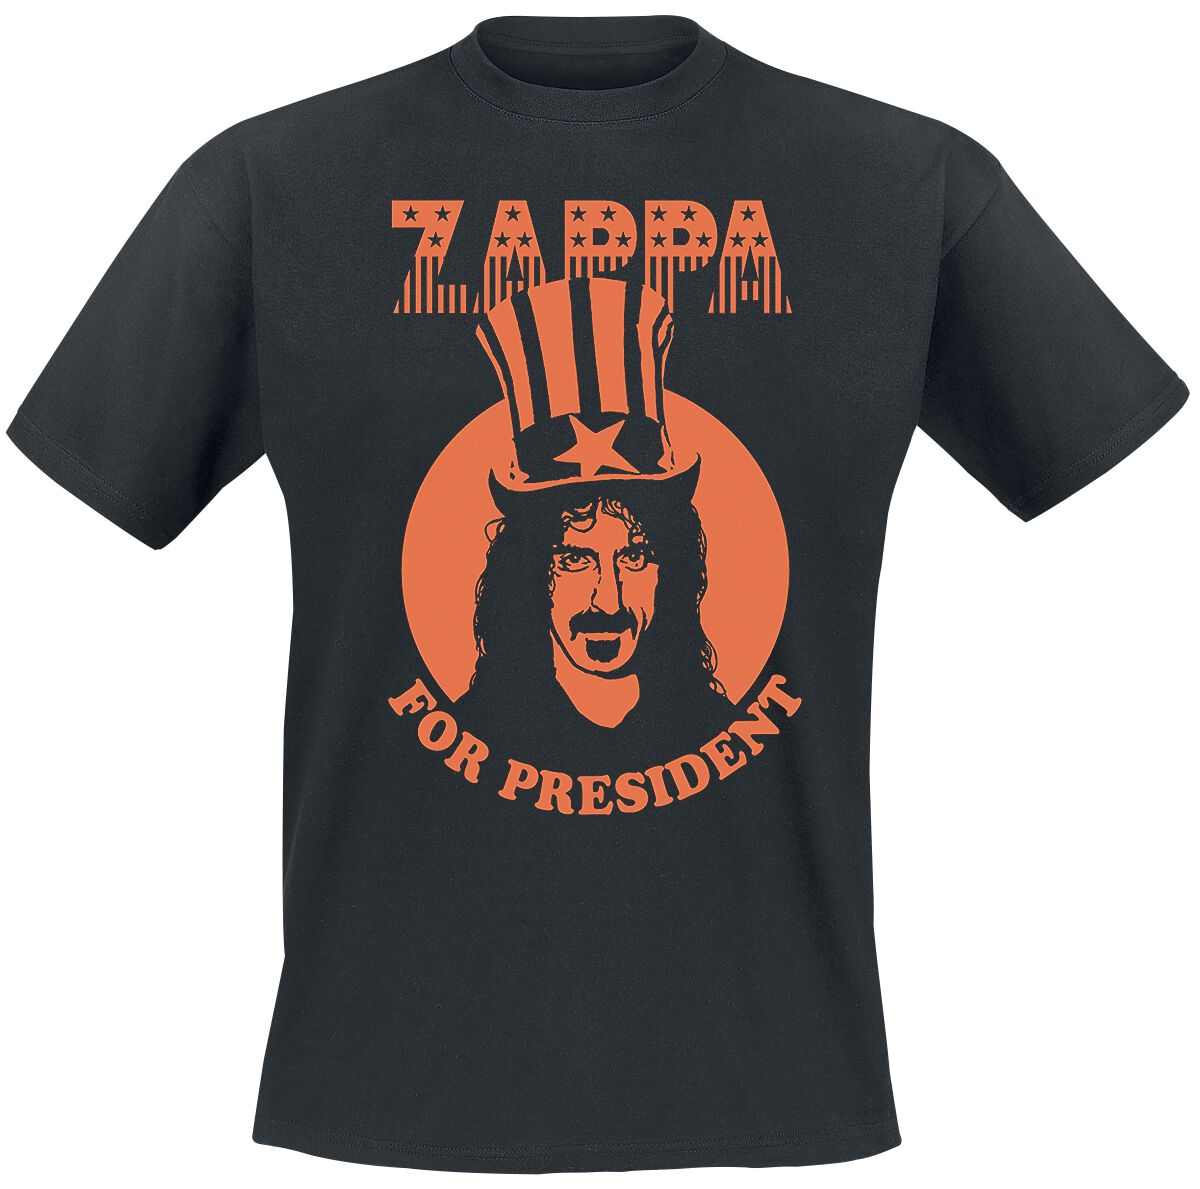 Frank Zappa For President T-Shirt black